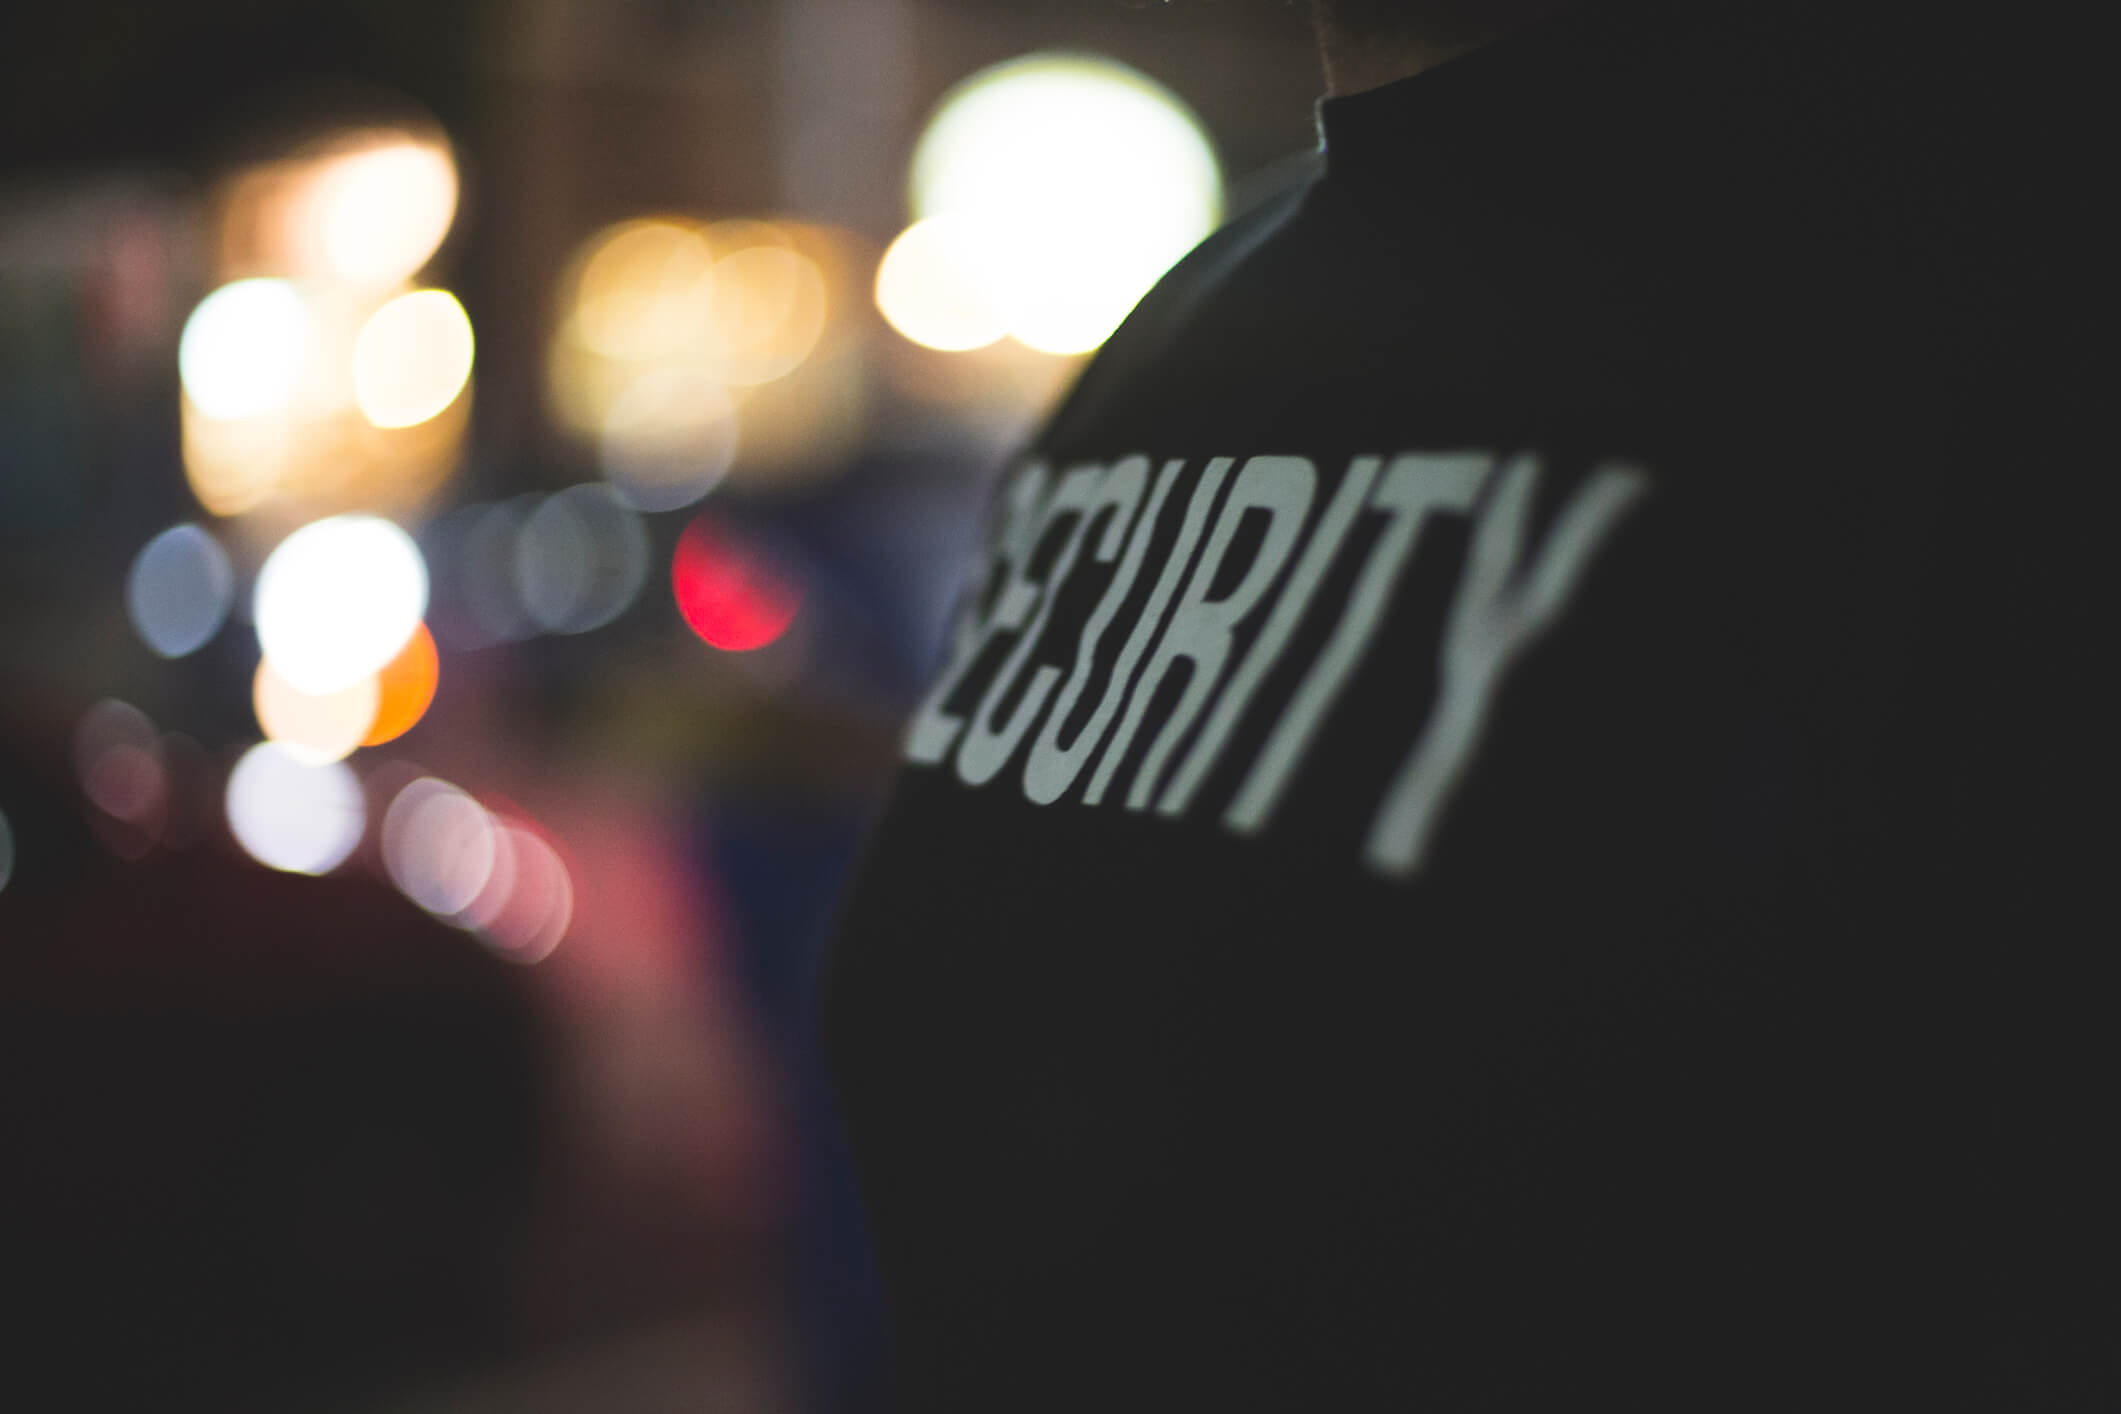 Security personnel at bar or nightclub door